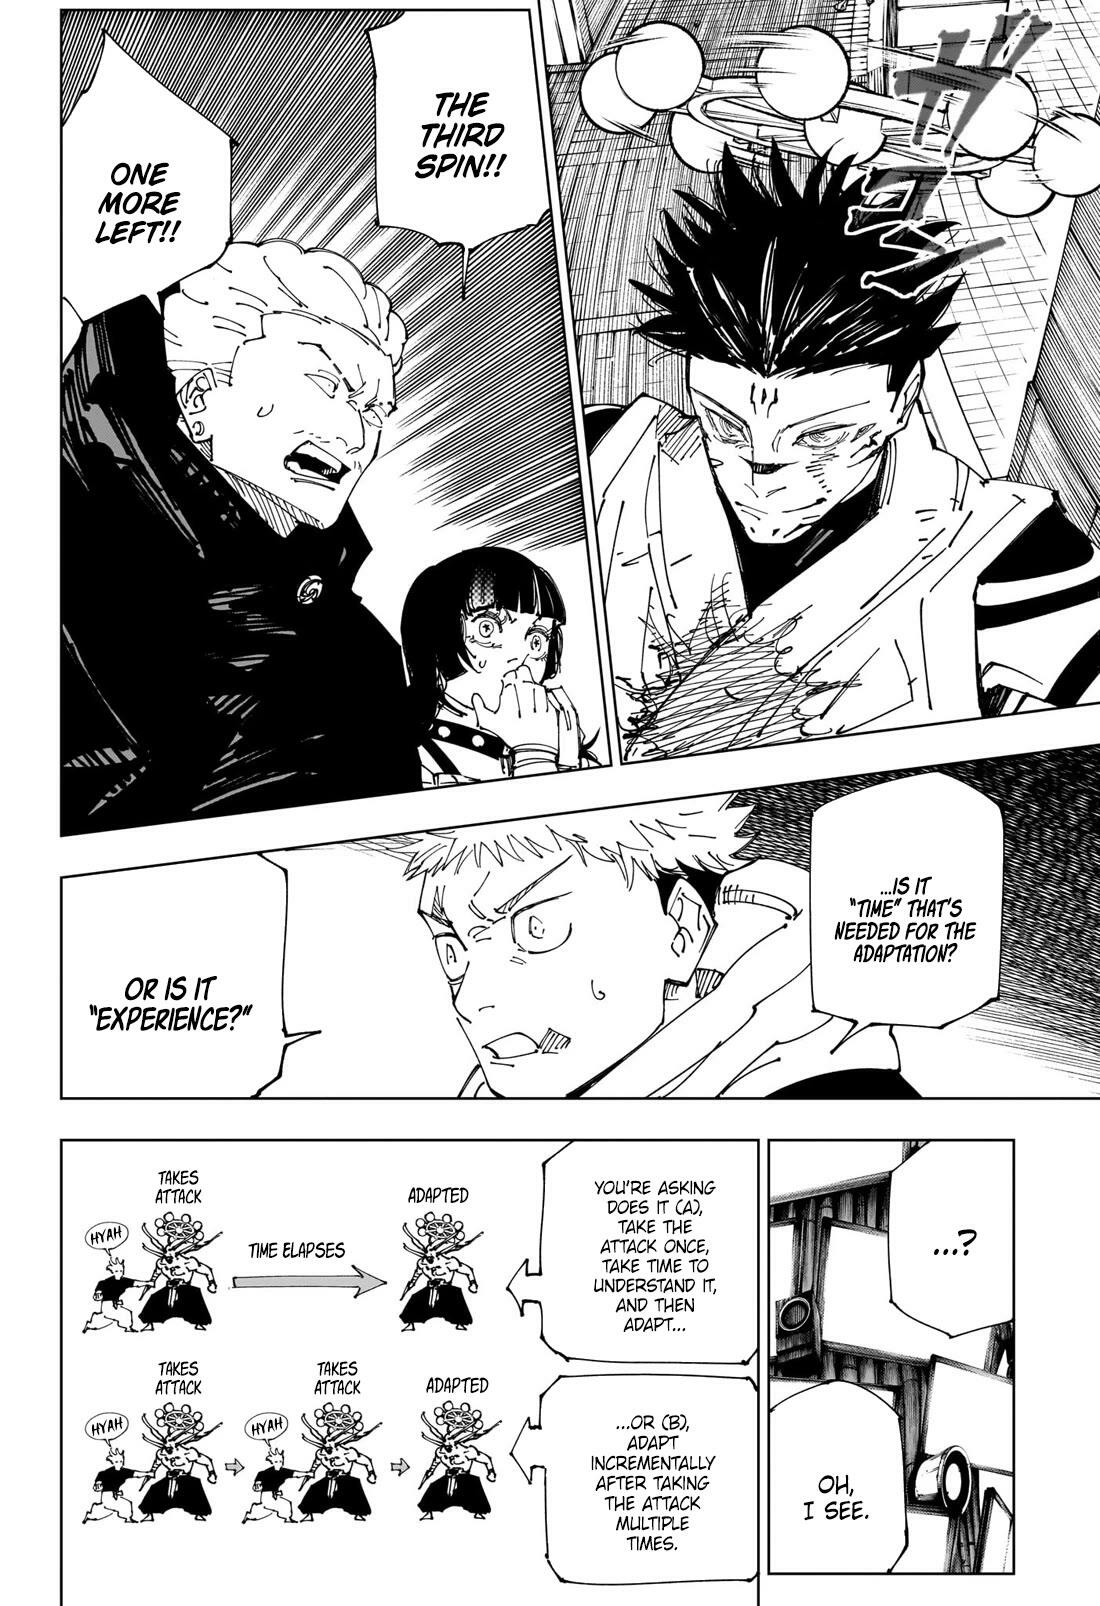 Jujutsu Kaisen Chapter 232: The Decisive Battle In The Uninhabited, Demon-Infested Shinjuku ⑩ page 7 - Mangakakalot